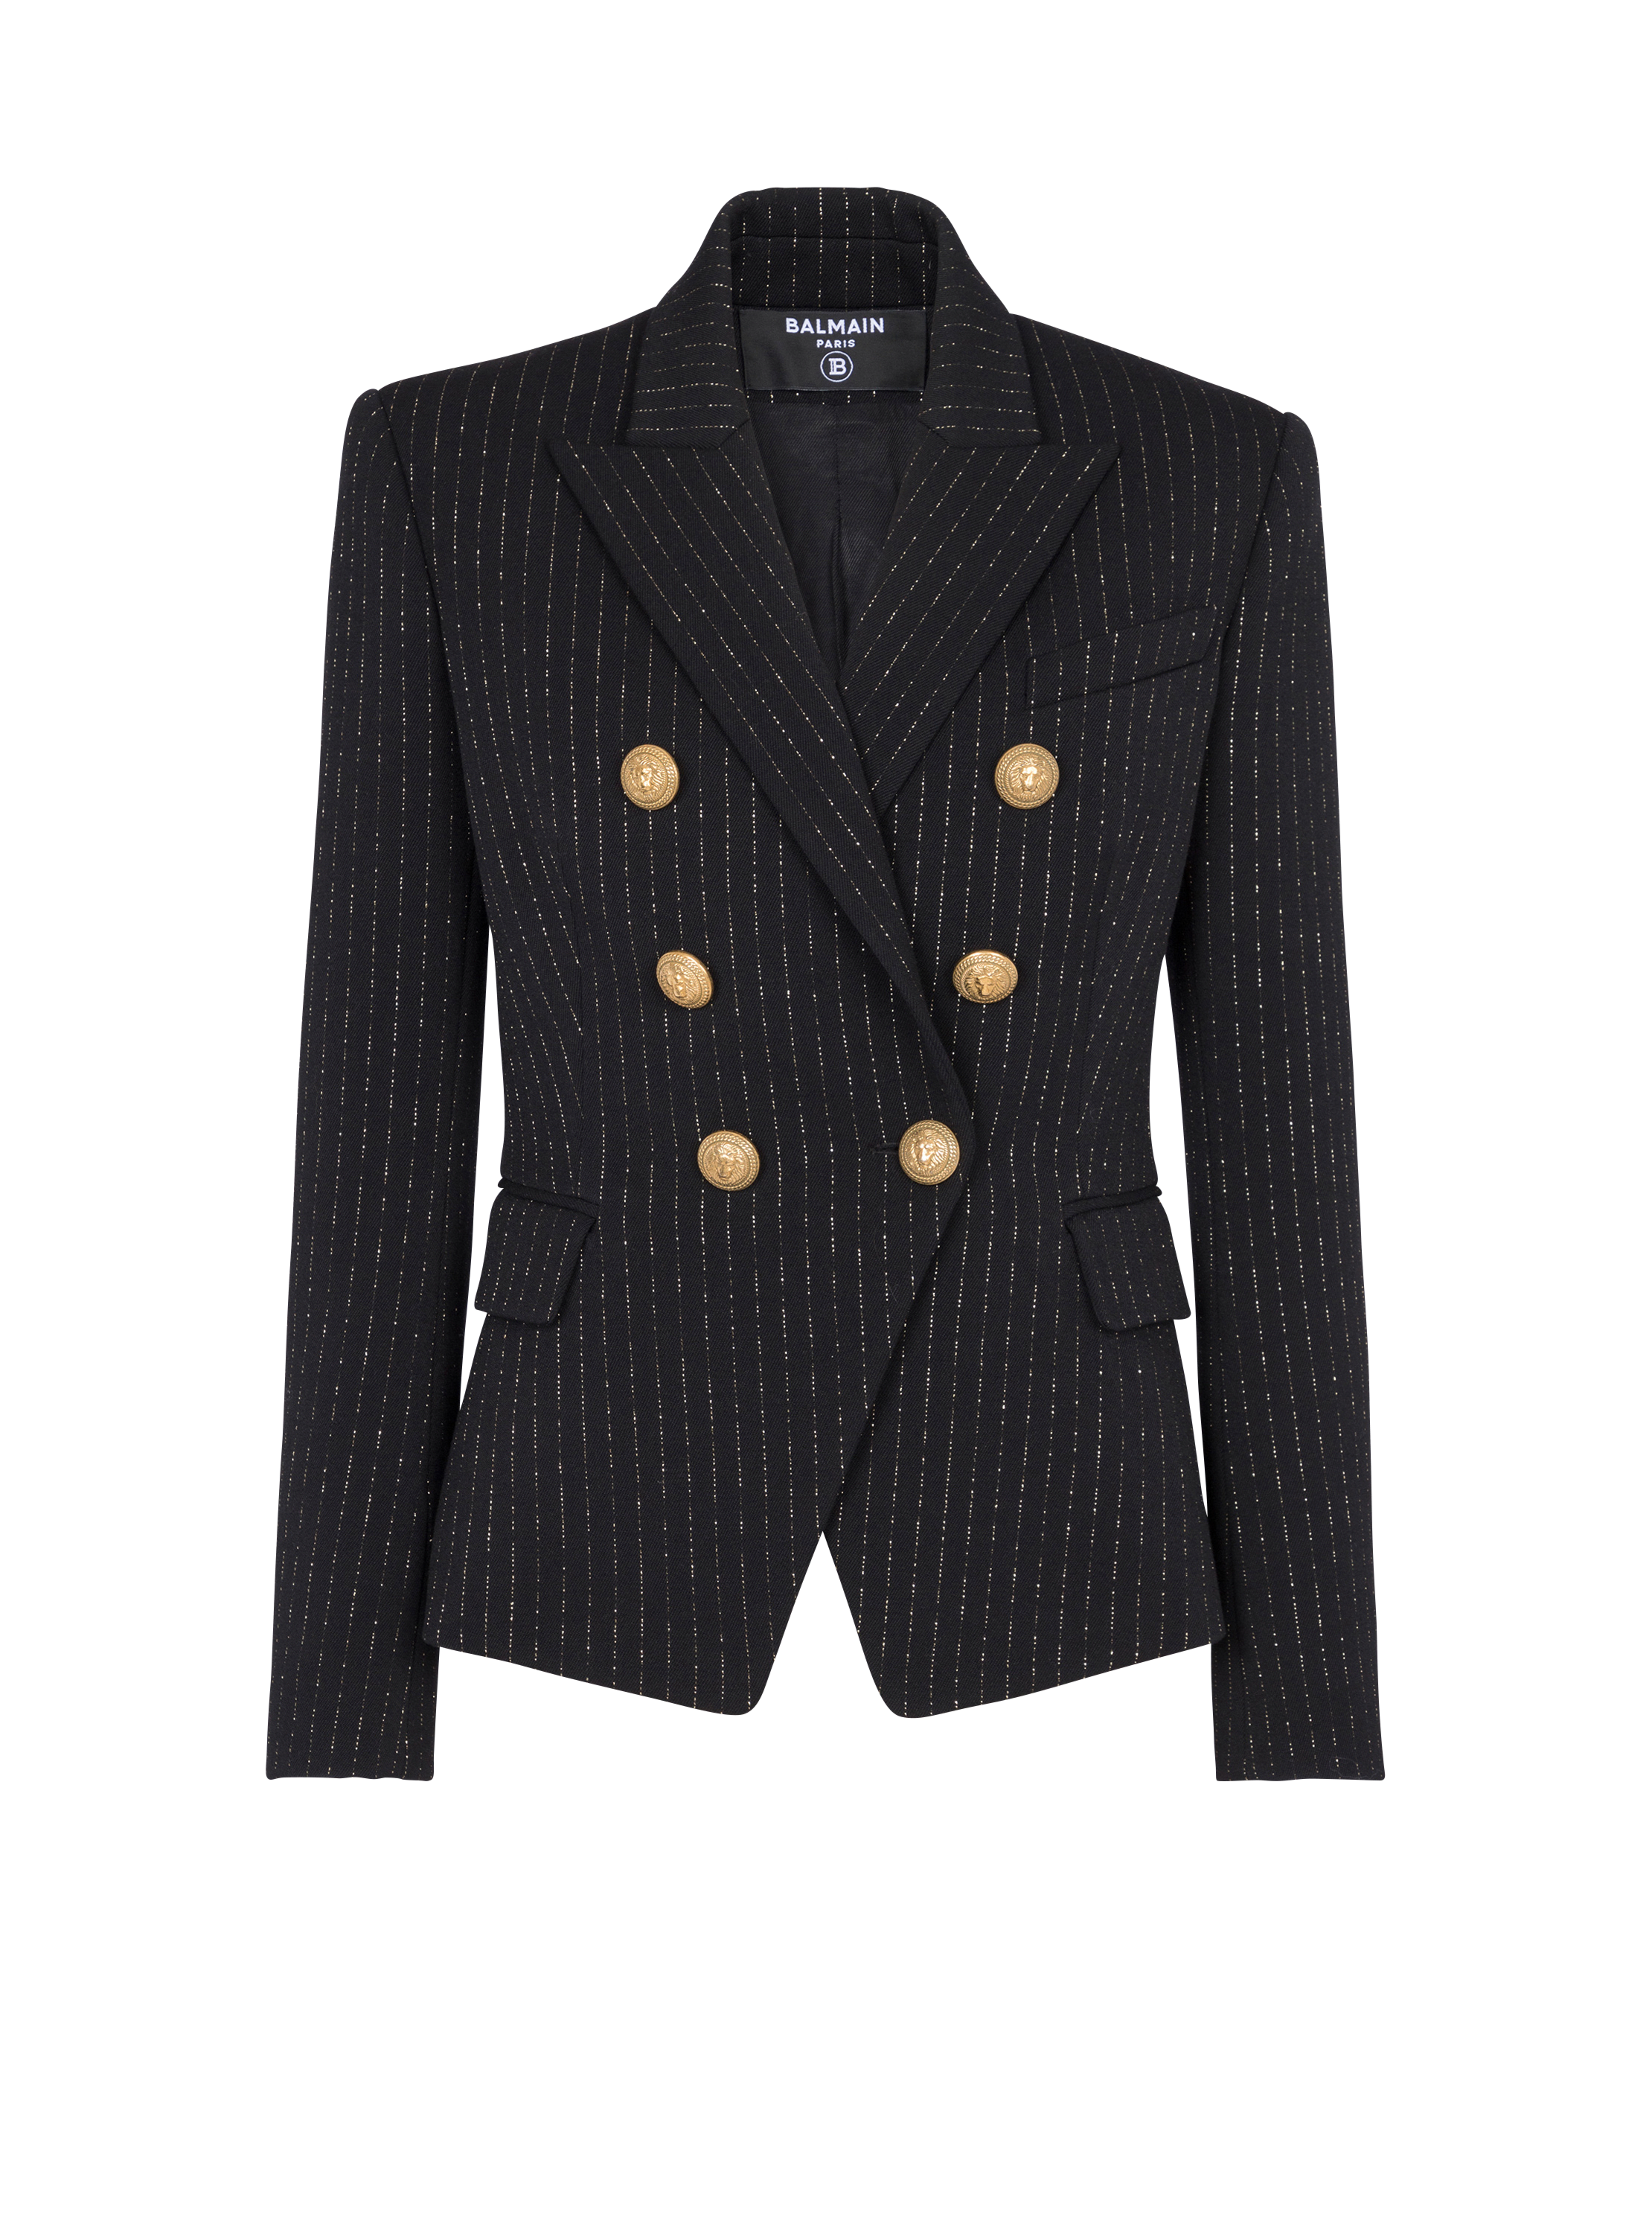 Classic 6-button jacket, black, hi-res